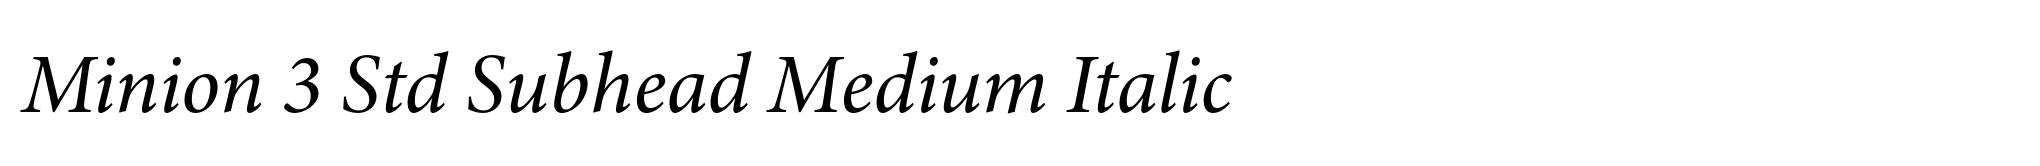 Minion 3 Std Subhead Medium Italic image